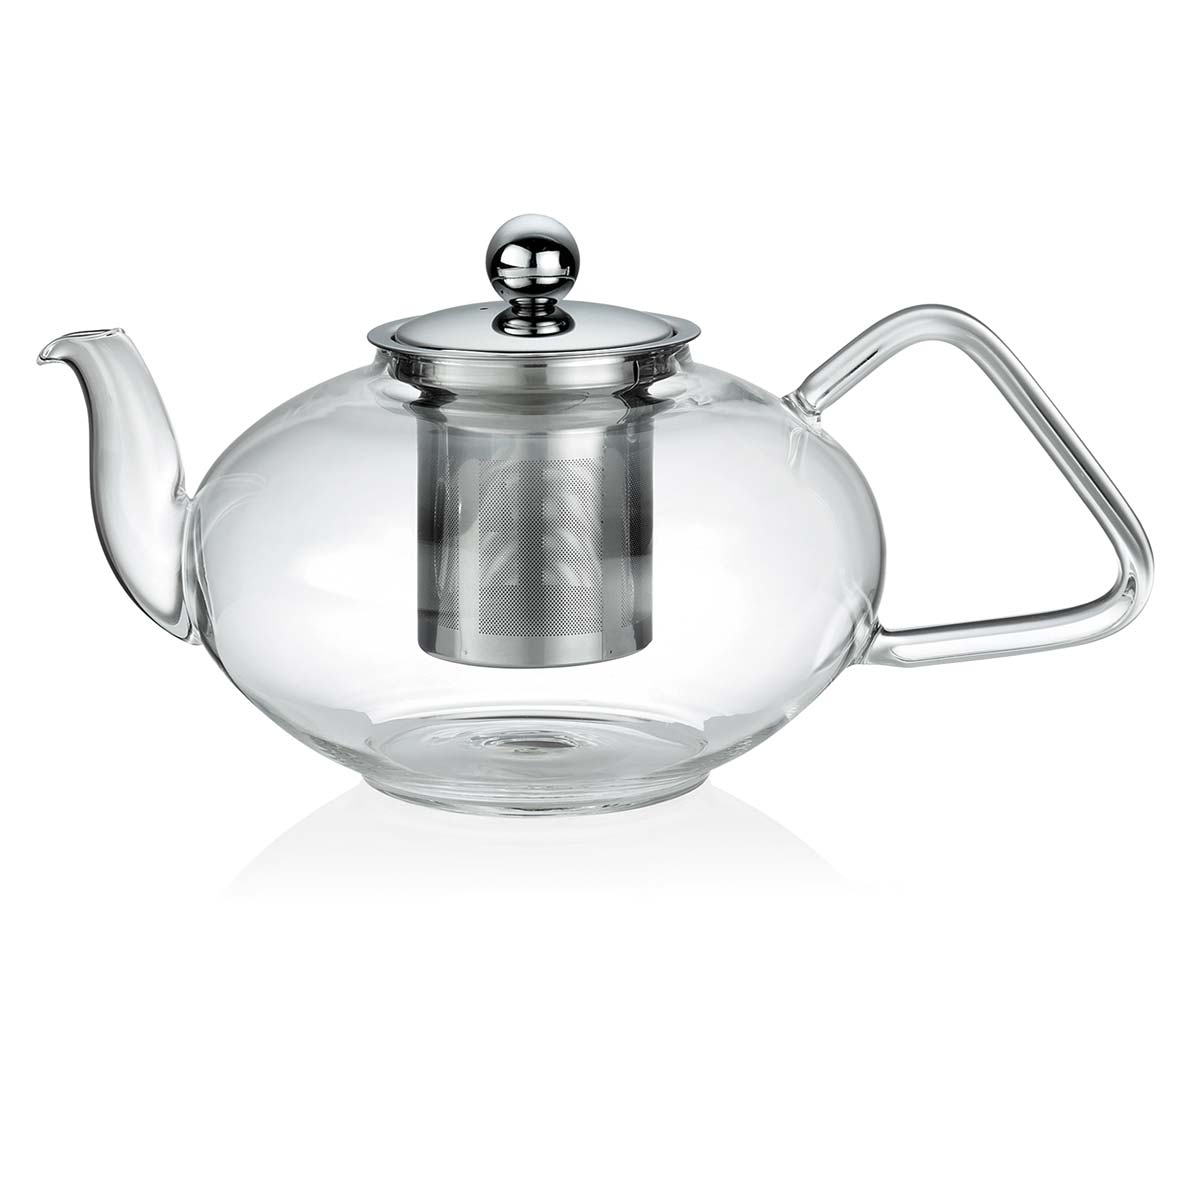 Küchenprofi TEA Teekanne TIBET - Filter aus rostfreiem Stahl 1,5 L